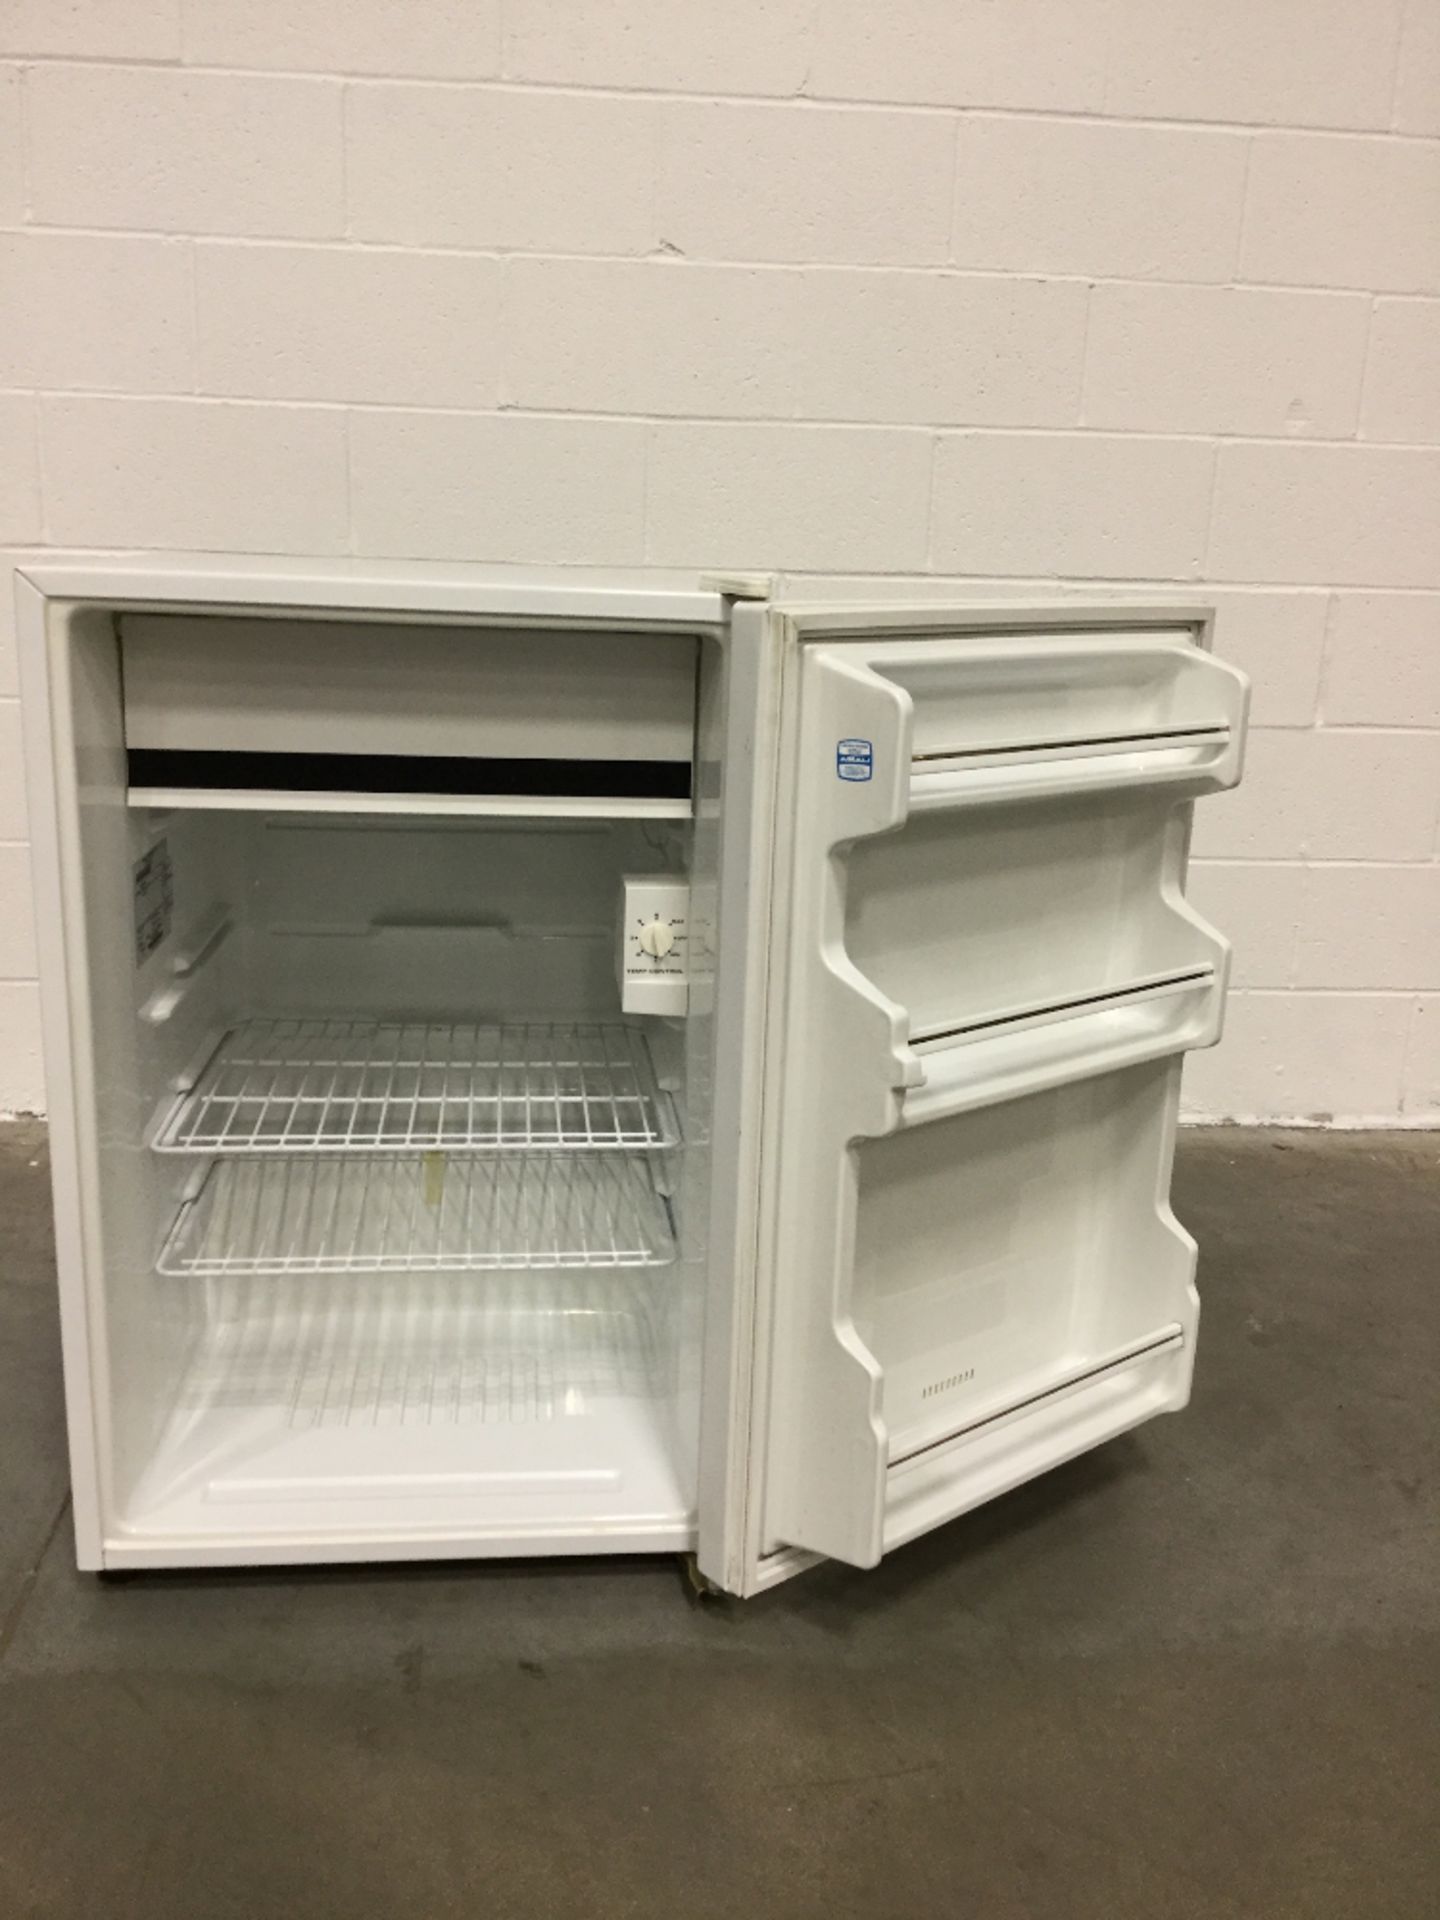 VWR Undercounter Laboratory Refrigerator/Freezer Combo - Image 3 of 3